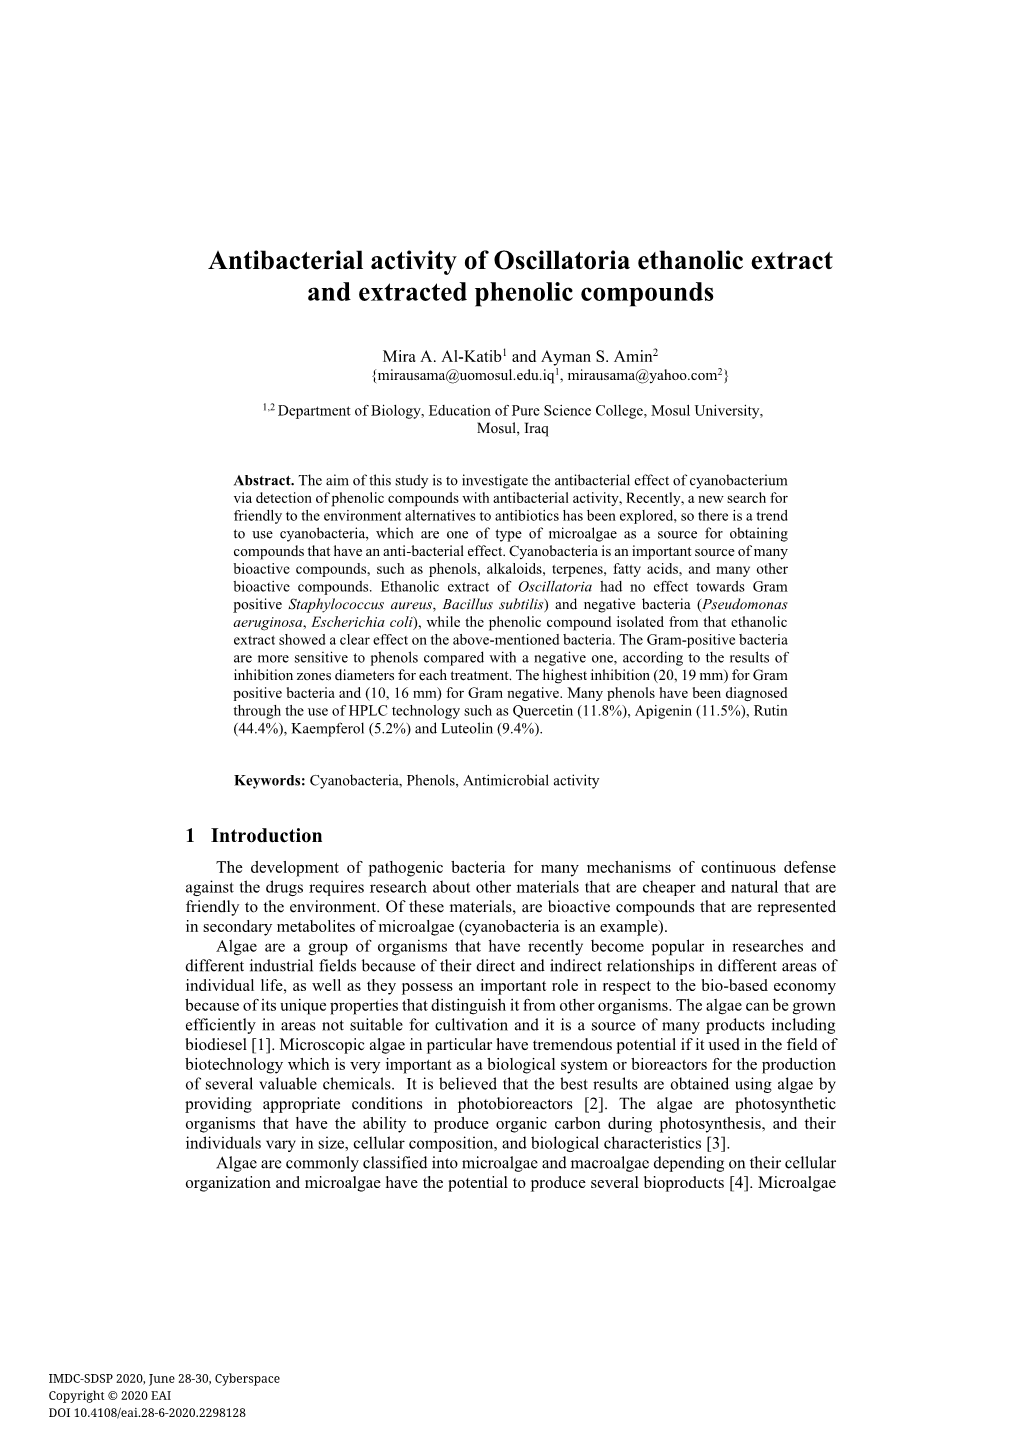 Antibacterial Activity of Oscillatoria Ethanolic Extract and Extracted Phenolic Compounds